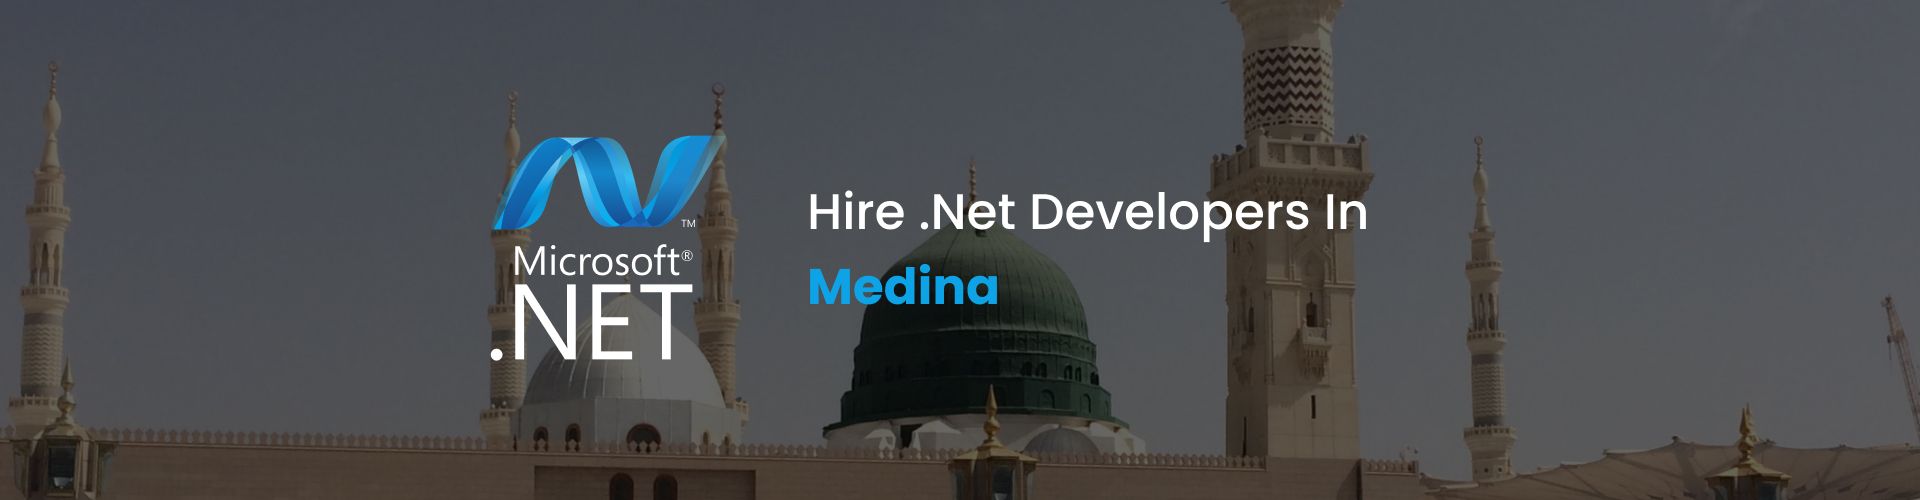 hire .net developers in medina